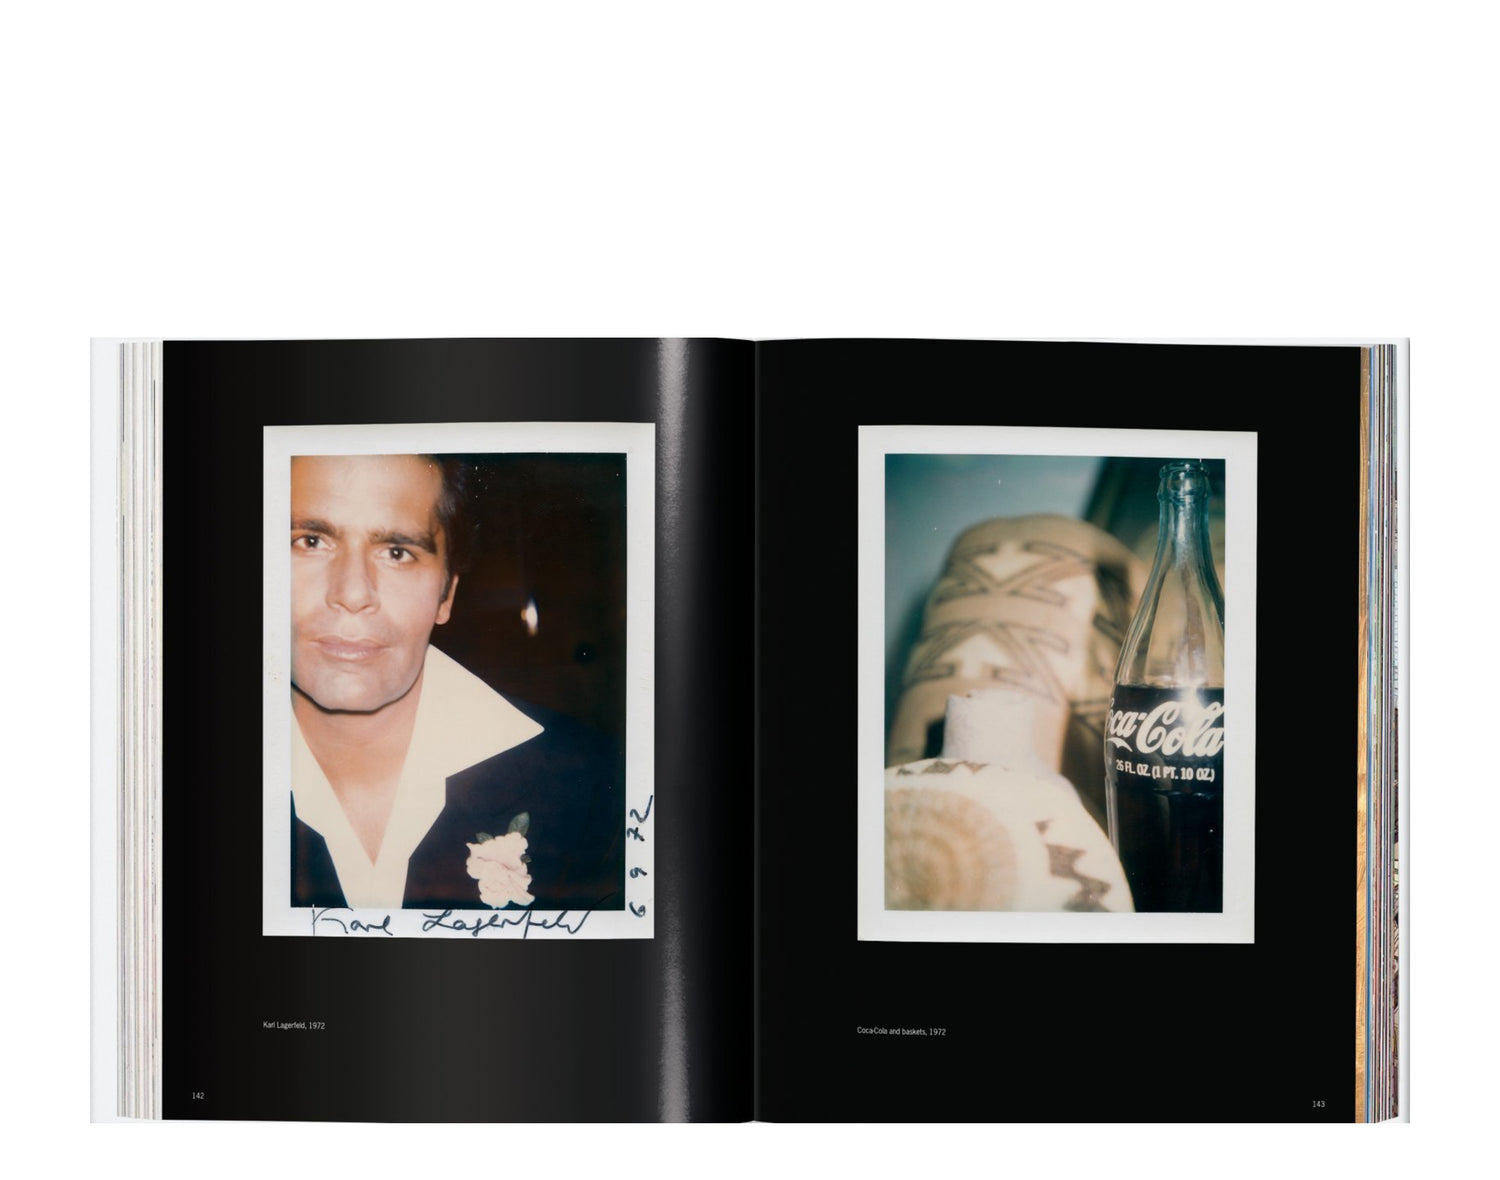 Taschen Books - Andy Warhol - Polaroids Hardcover Book